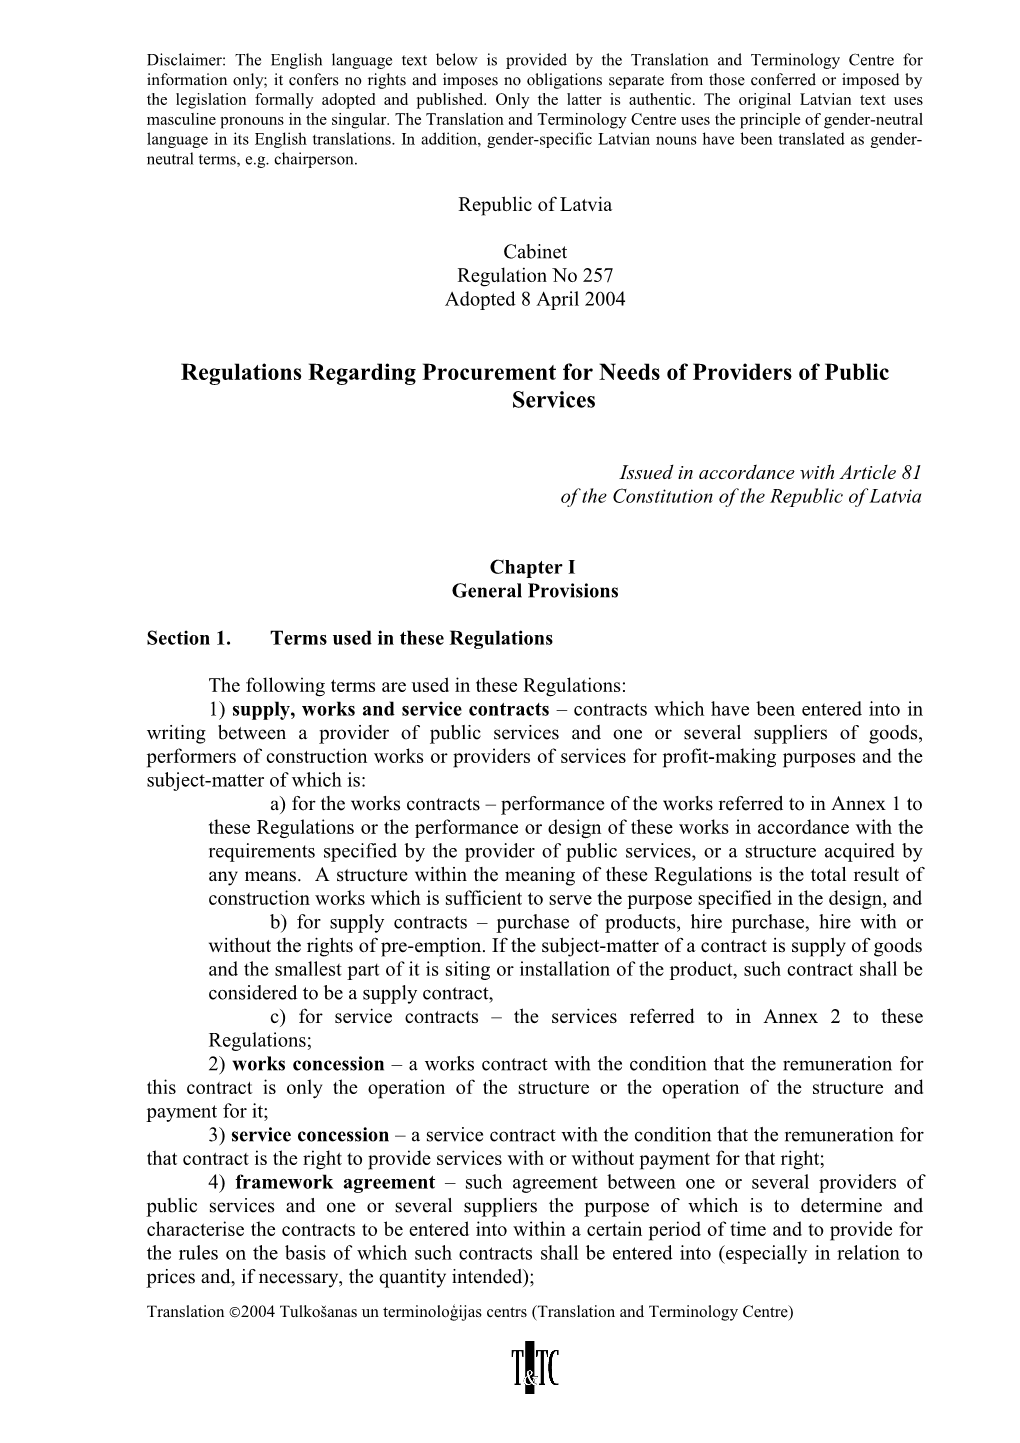 Regulations Regarding Procurement for Needs of Providers of Public Services